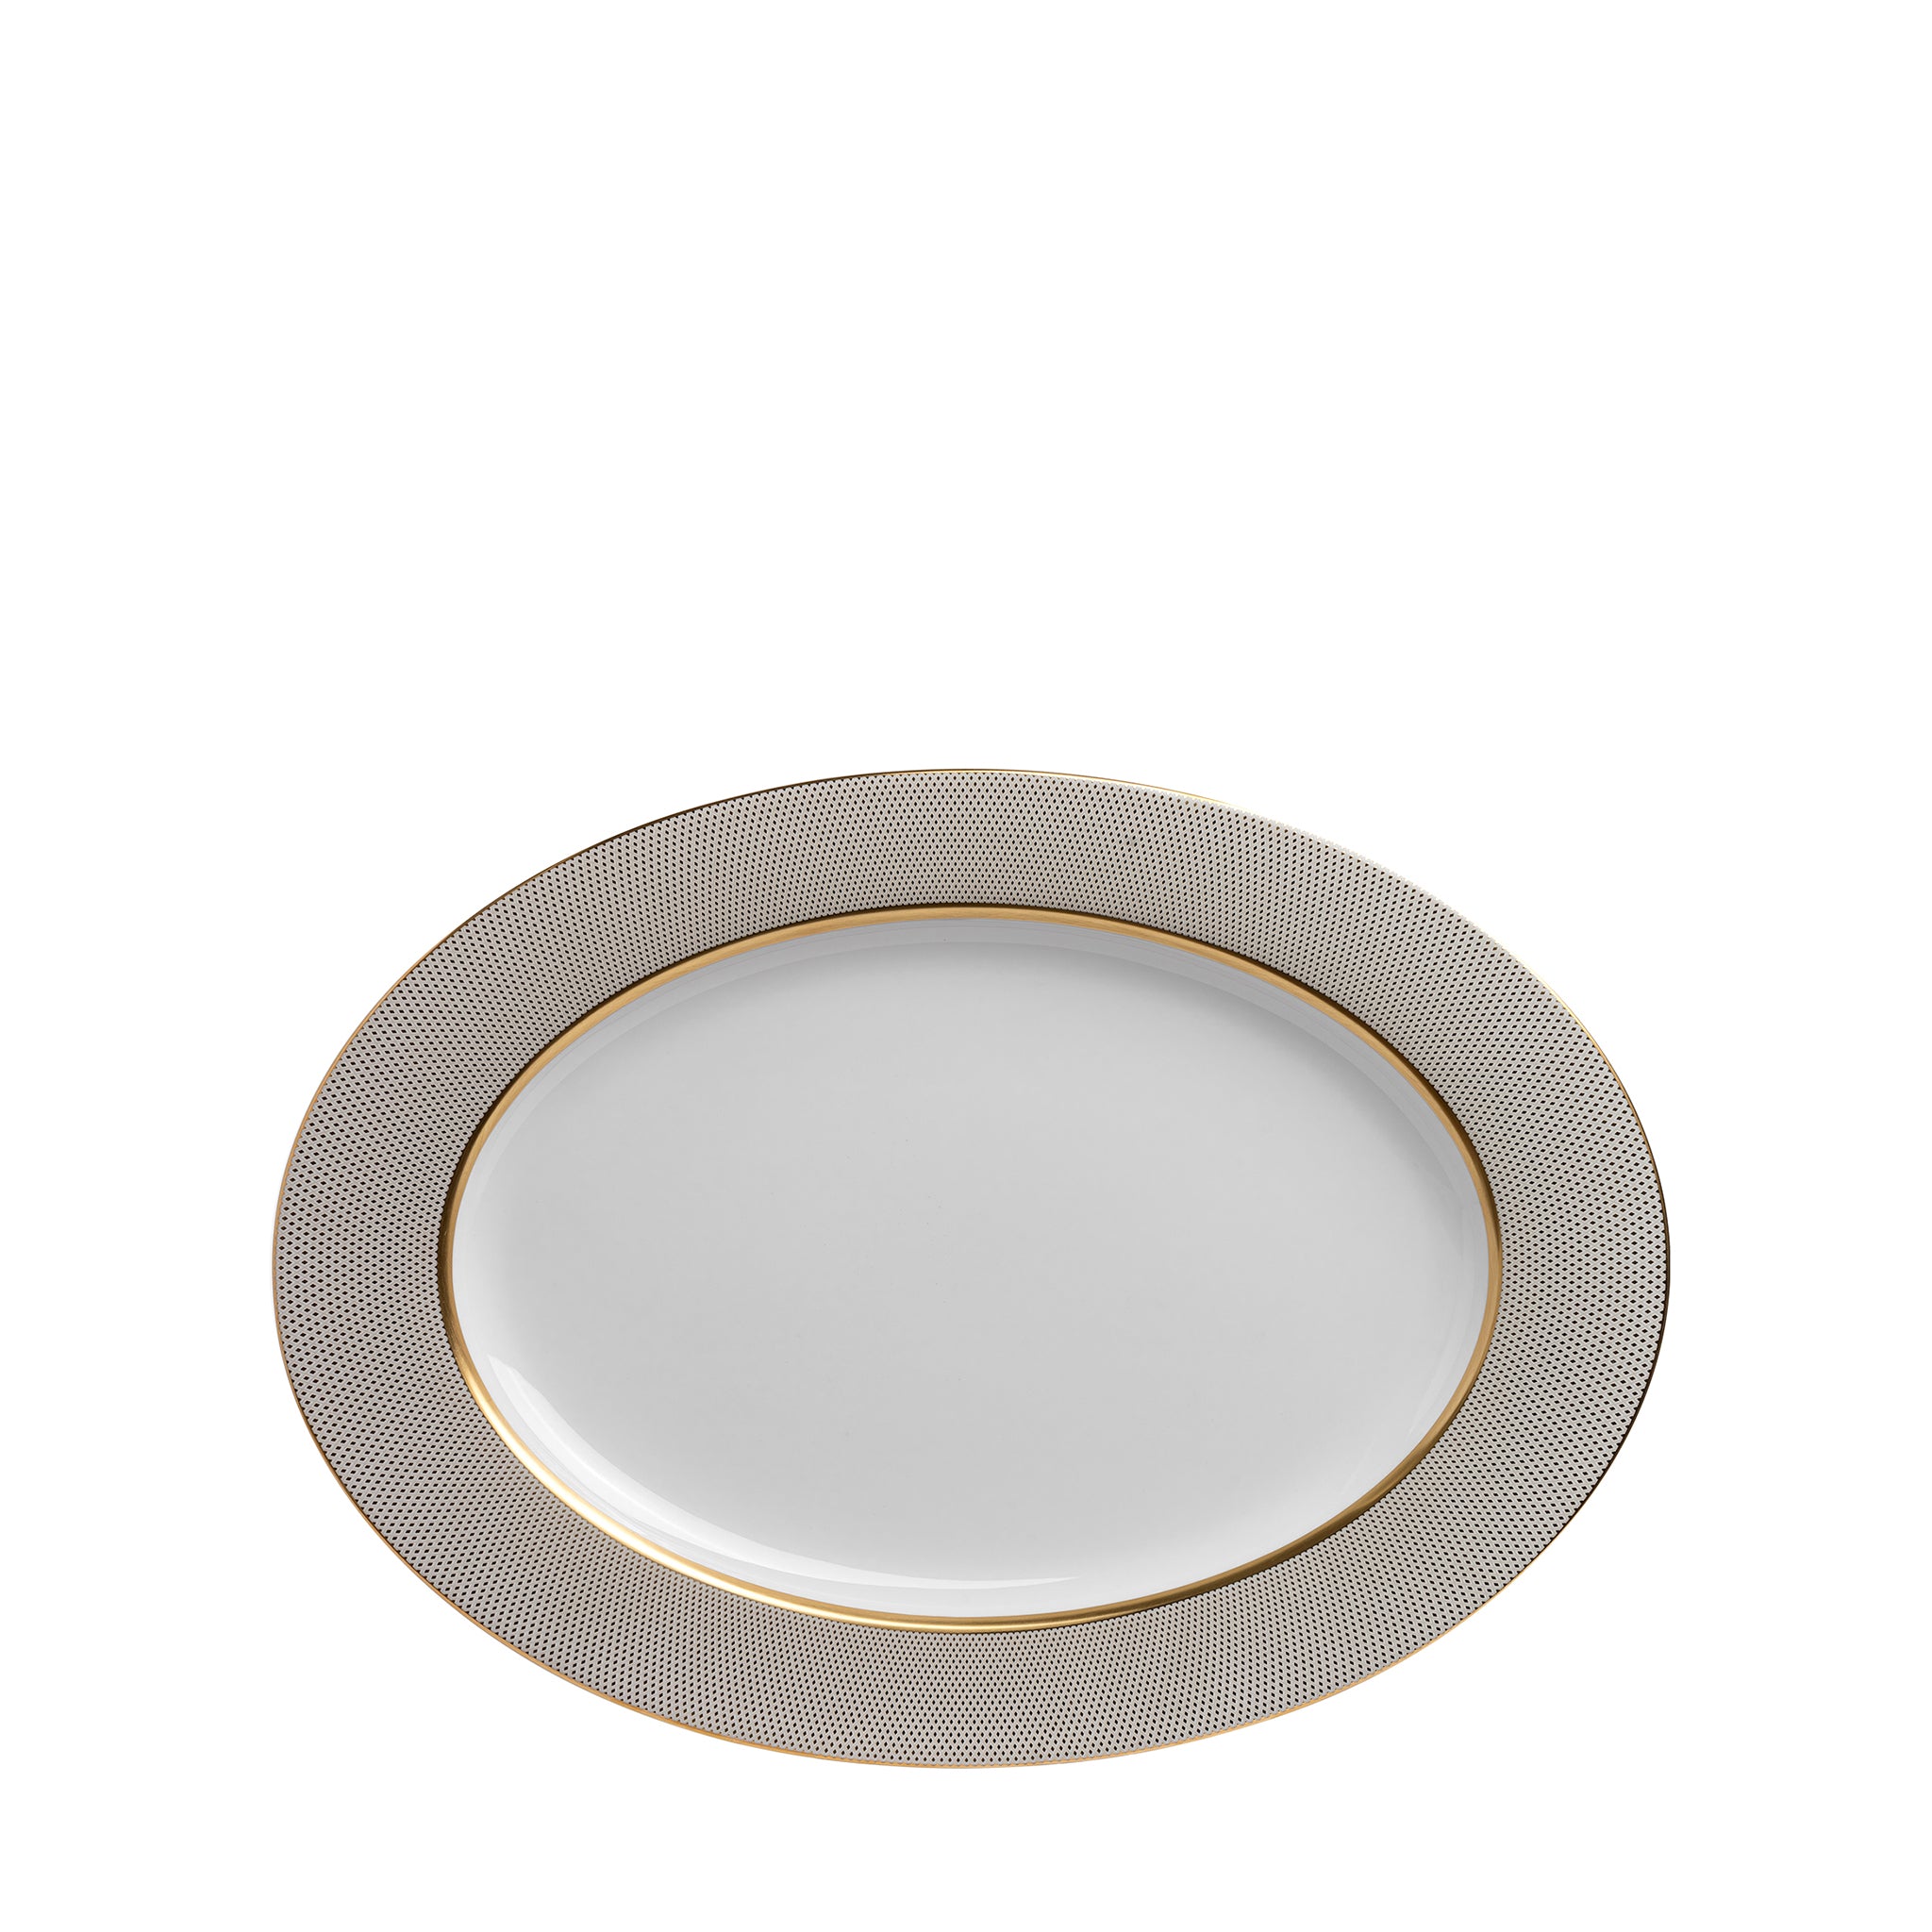 narumi gold diamond 32cm oval platter serving platters 